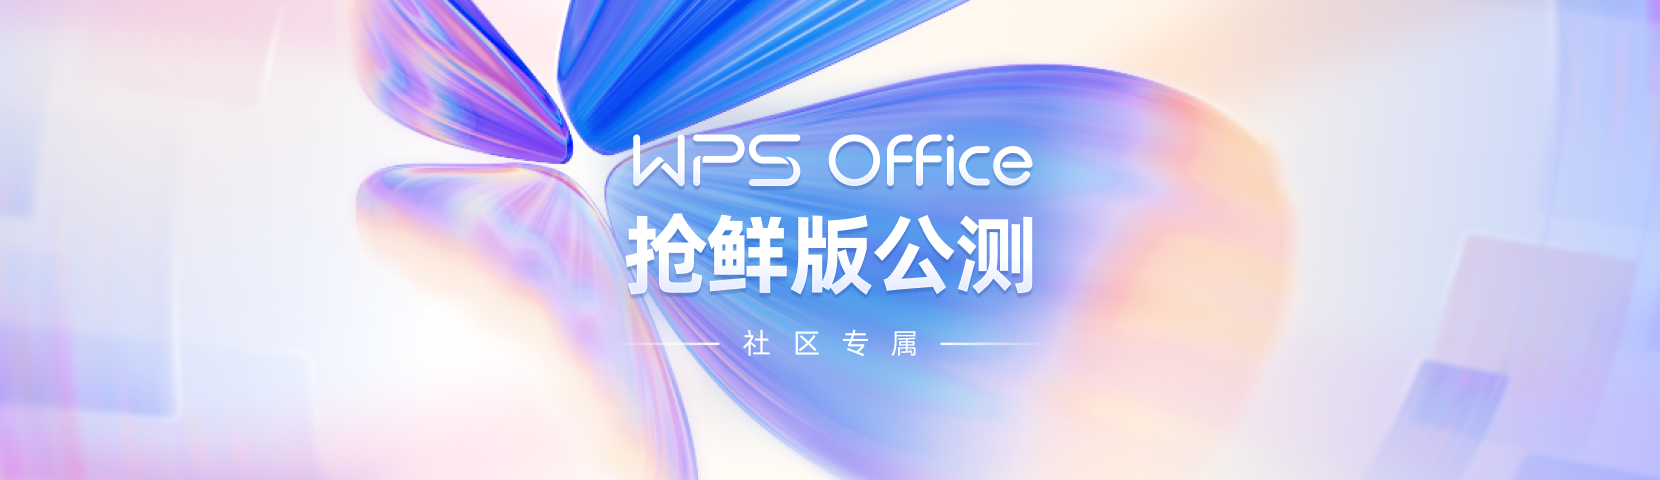 “WPS Office 抢鲜版”提前公测